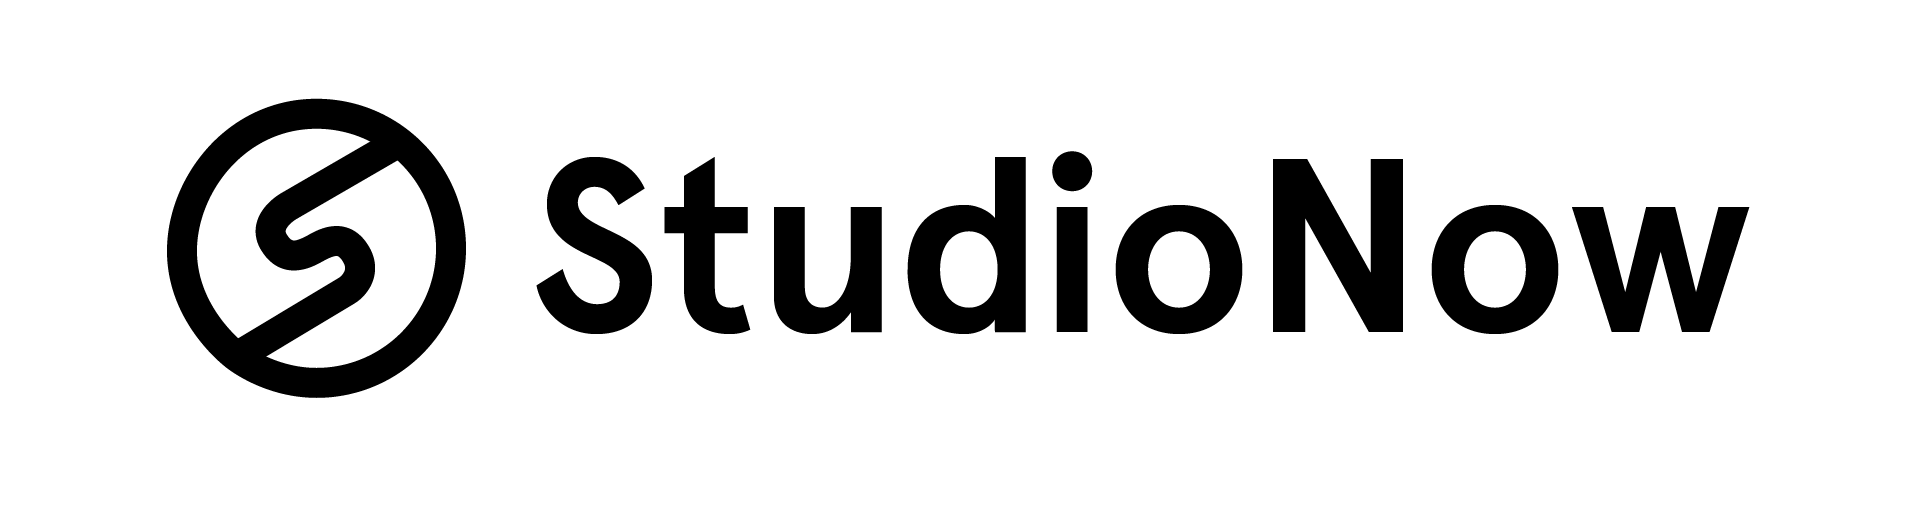 StudioNow-logo-black